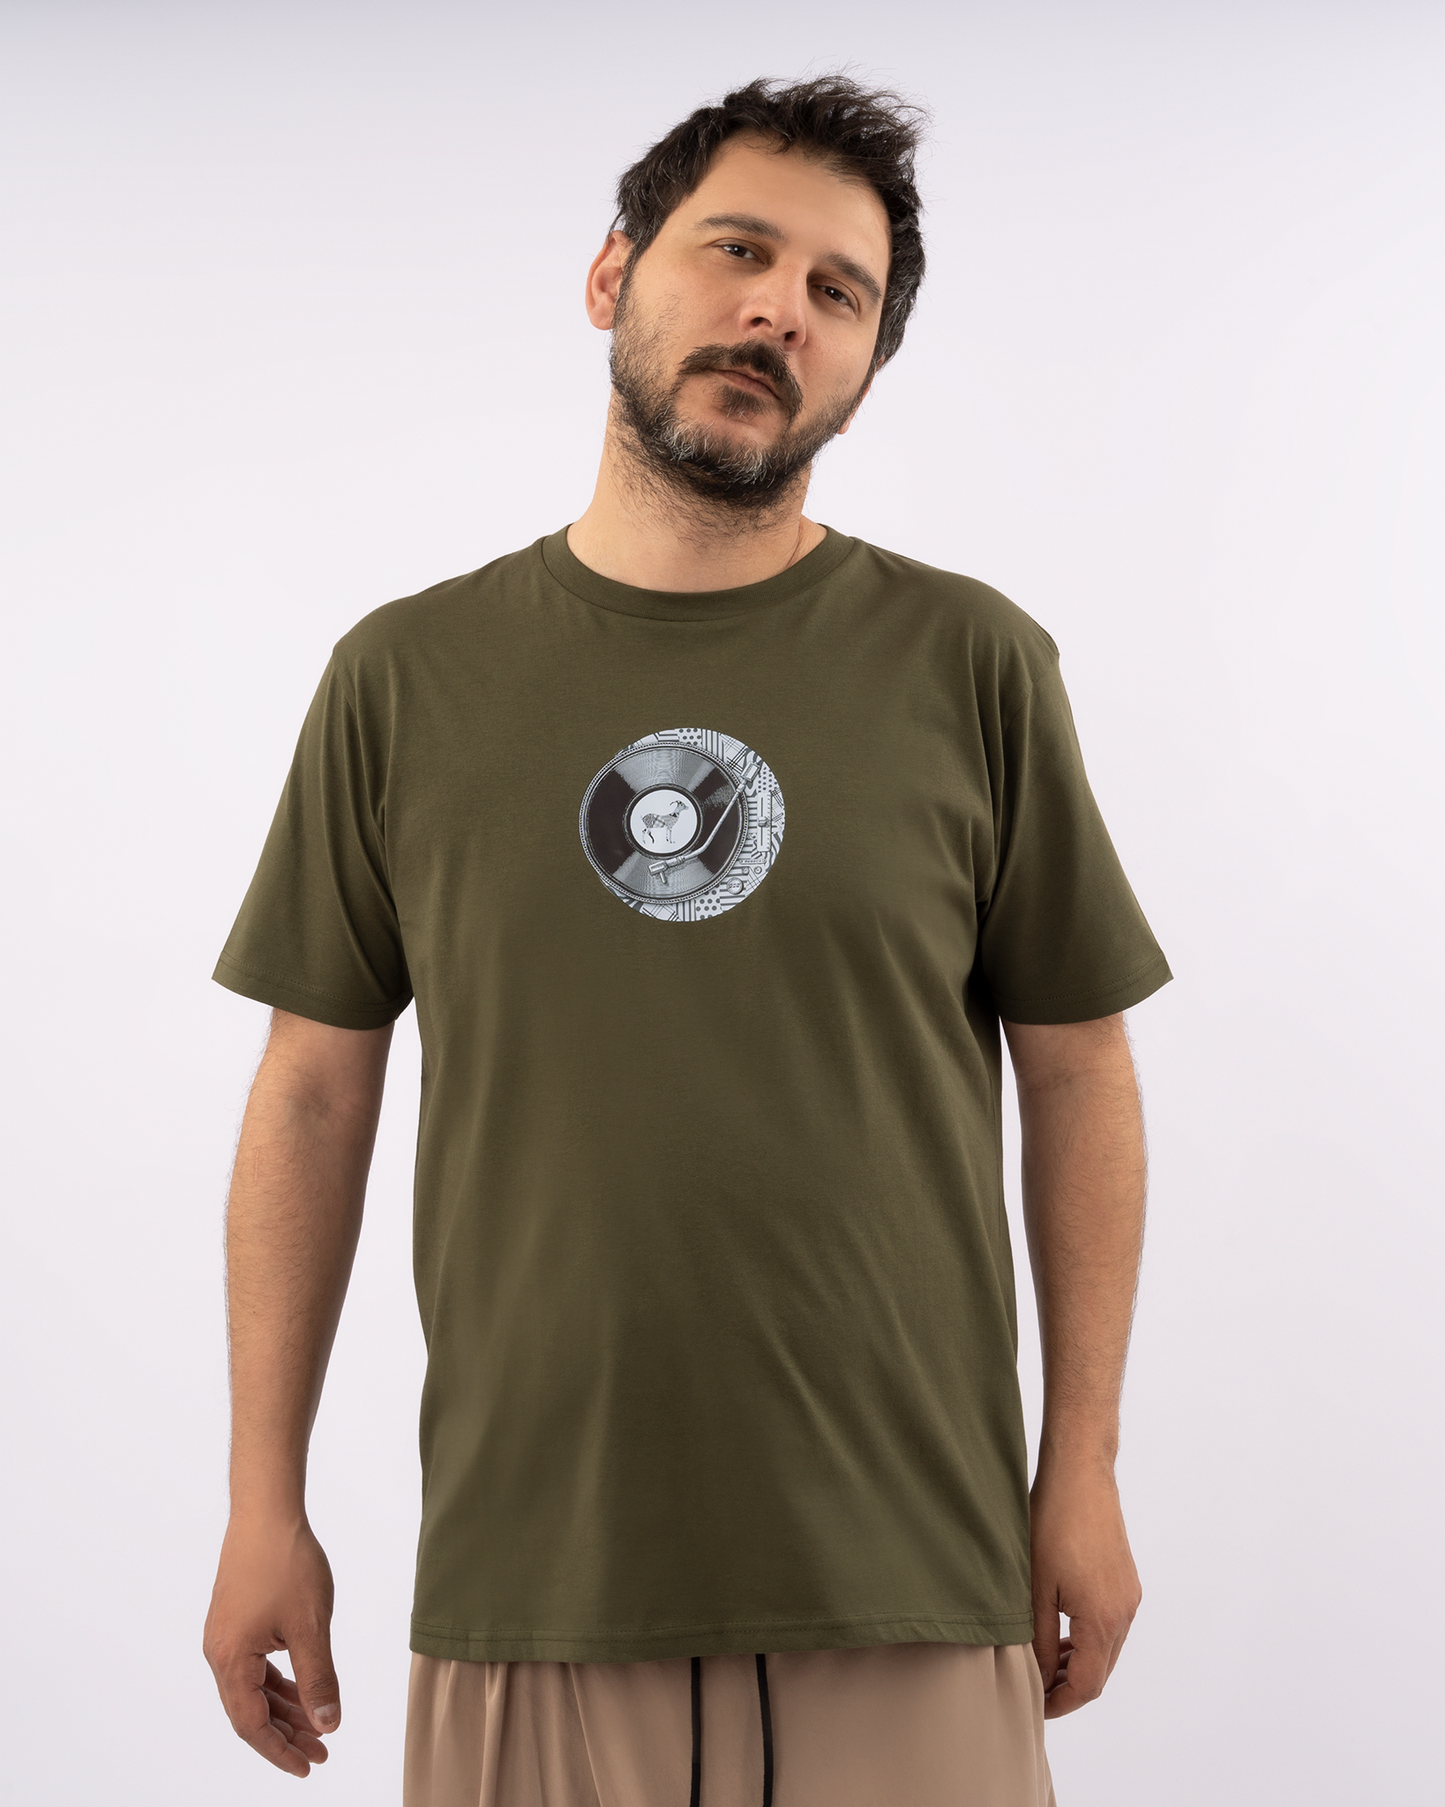 THE MOTLEY GOAT κοντομάνικη μπλούζα με σχέδιο βινύλιο